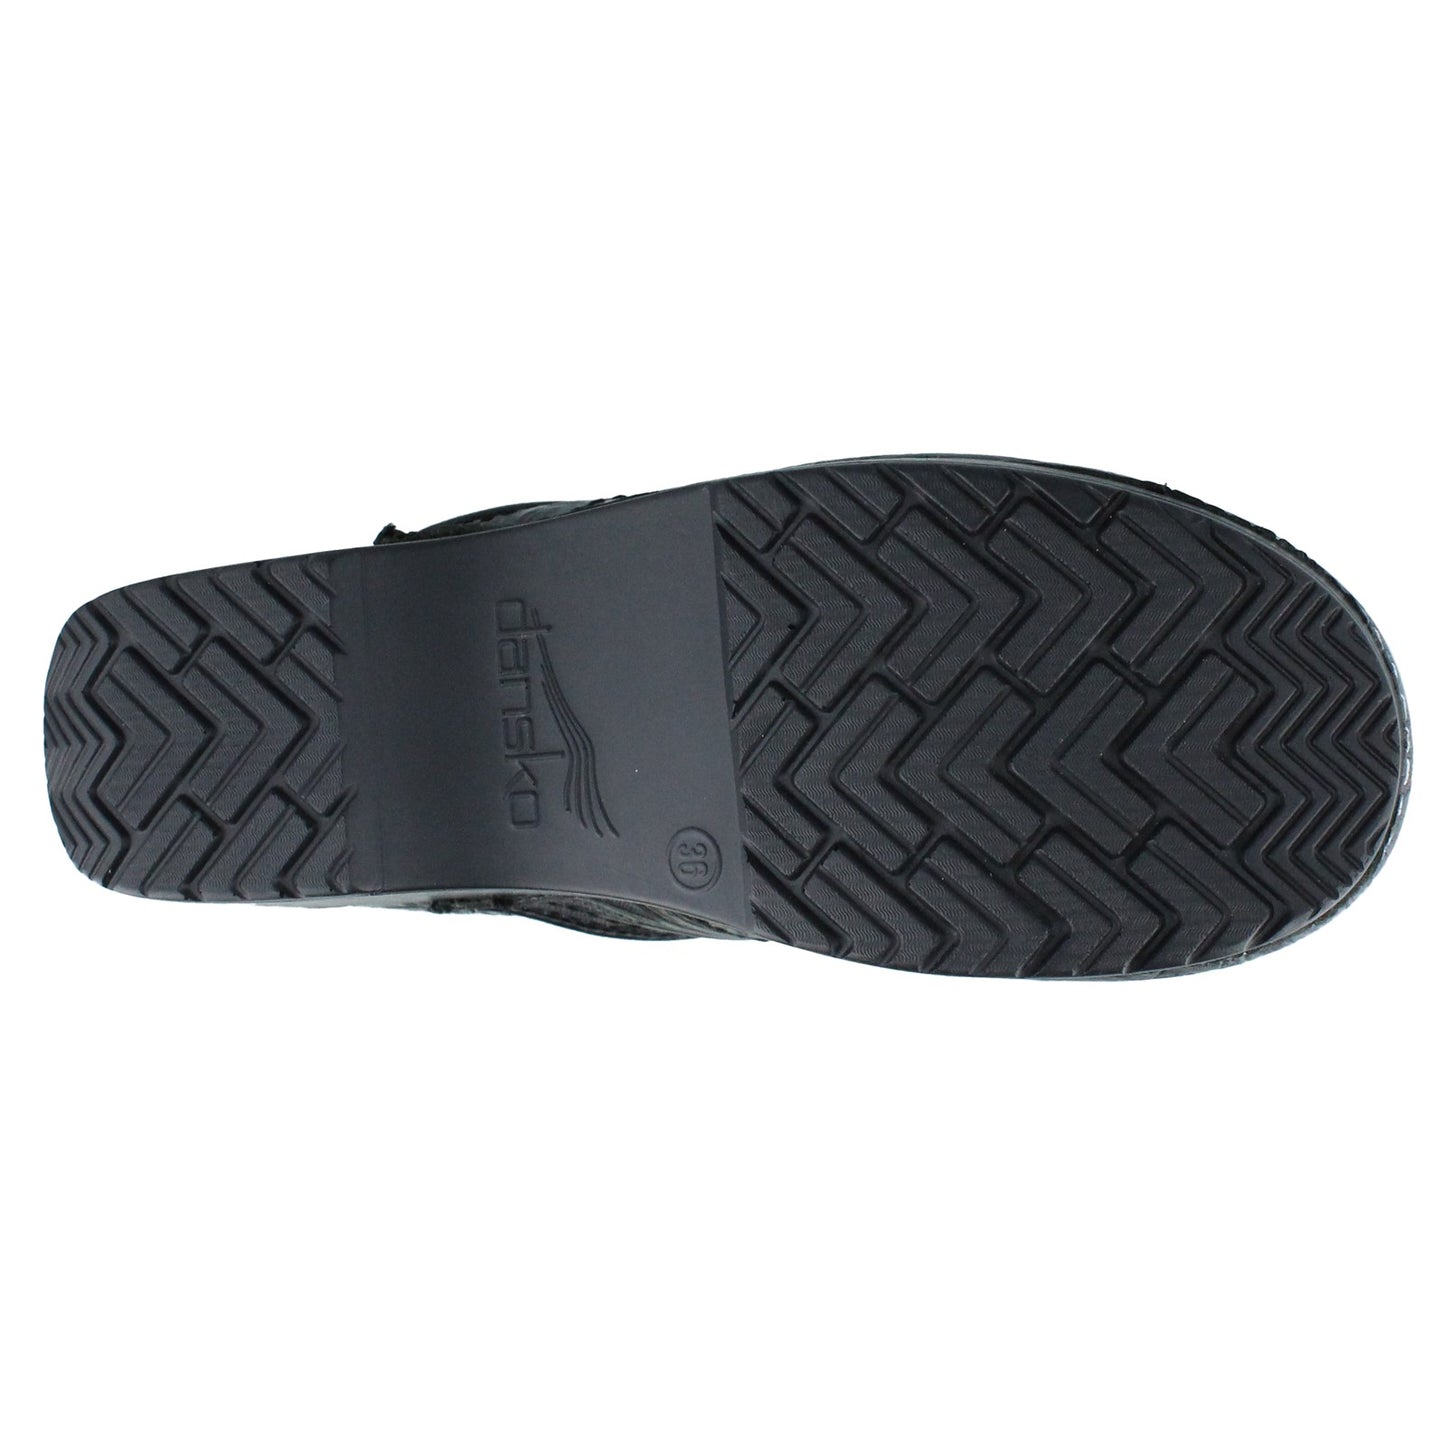 Peltz Shoes  Women's Dansko Professional Clog Black 906-020202